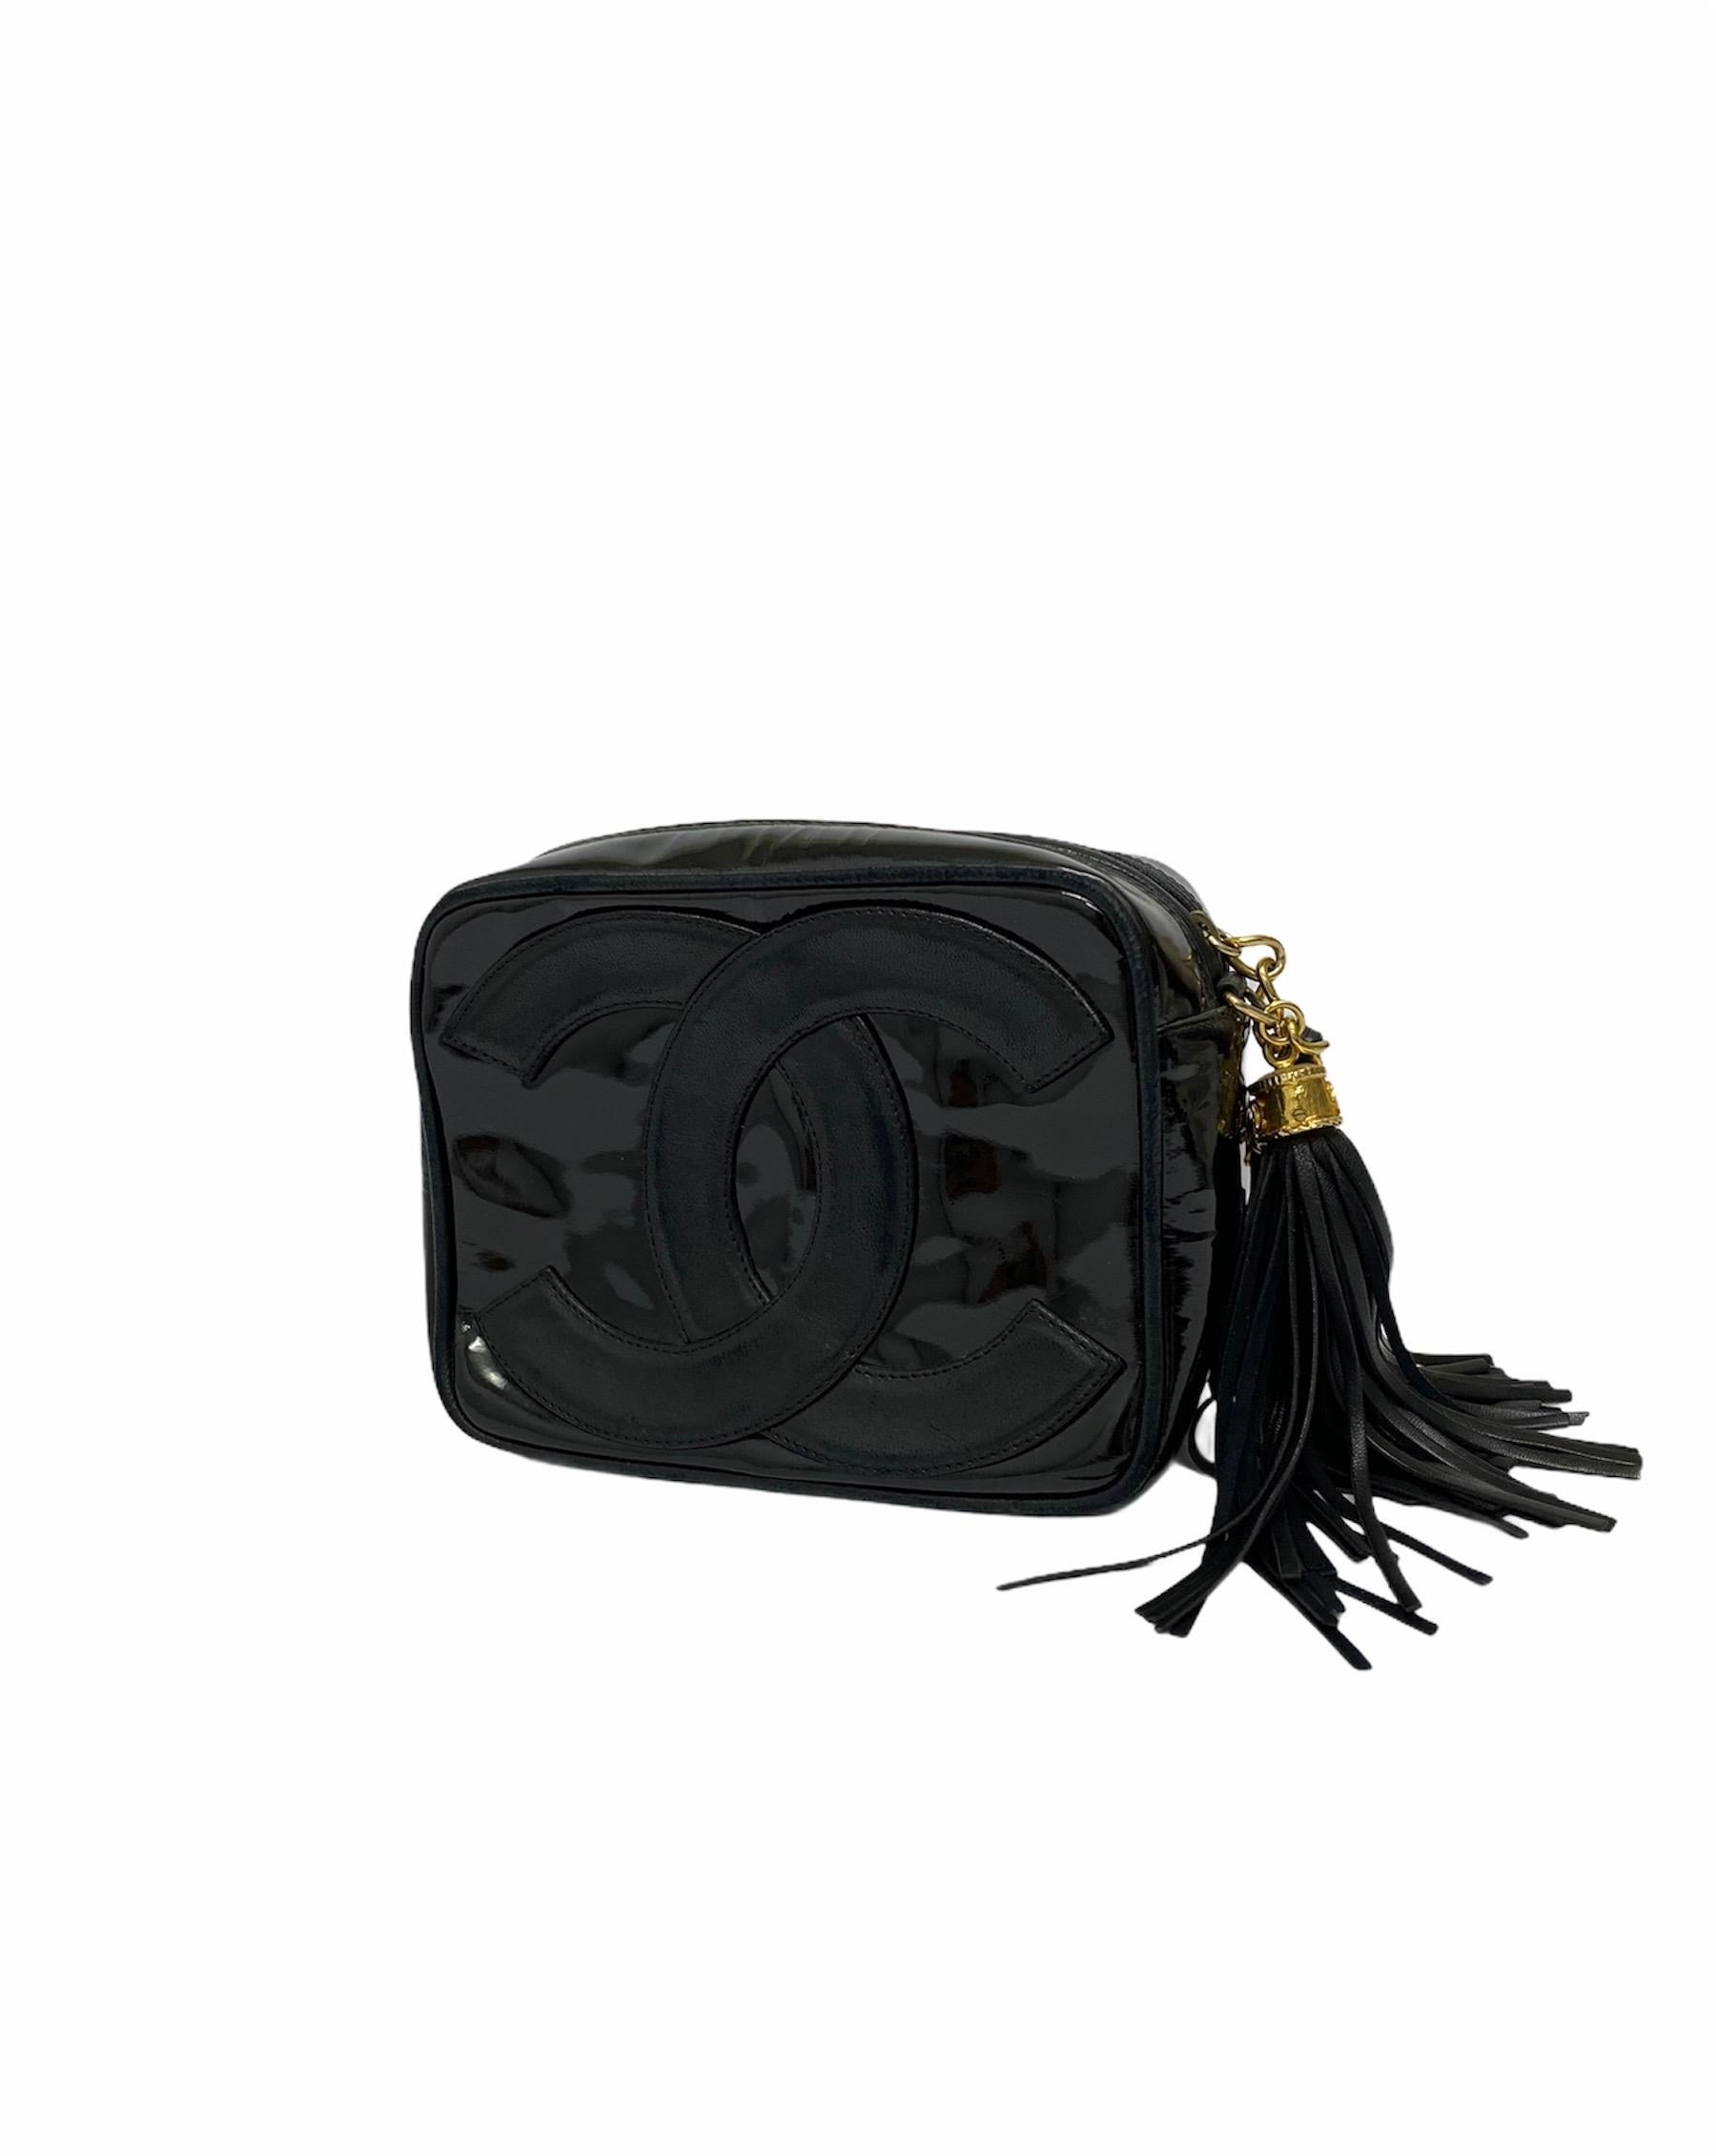 chanel black camera bag